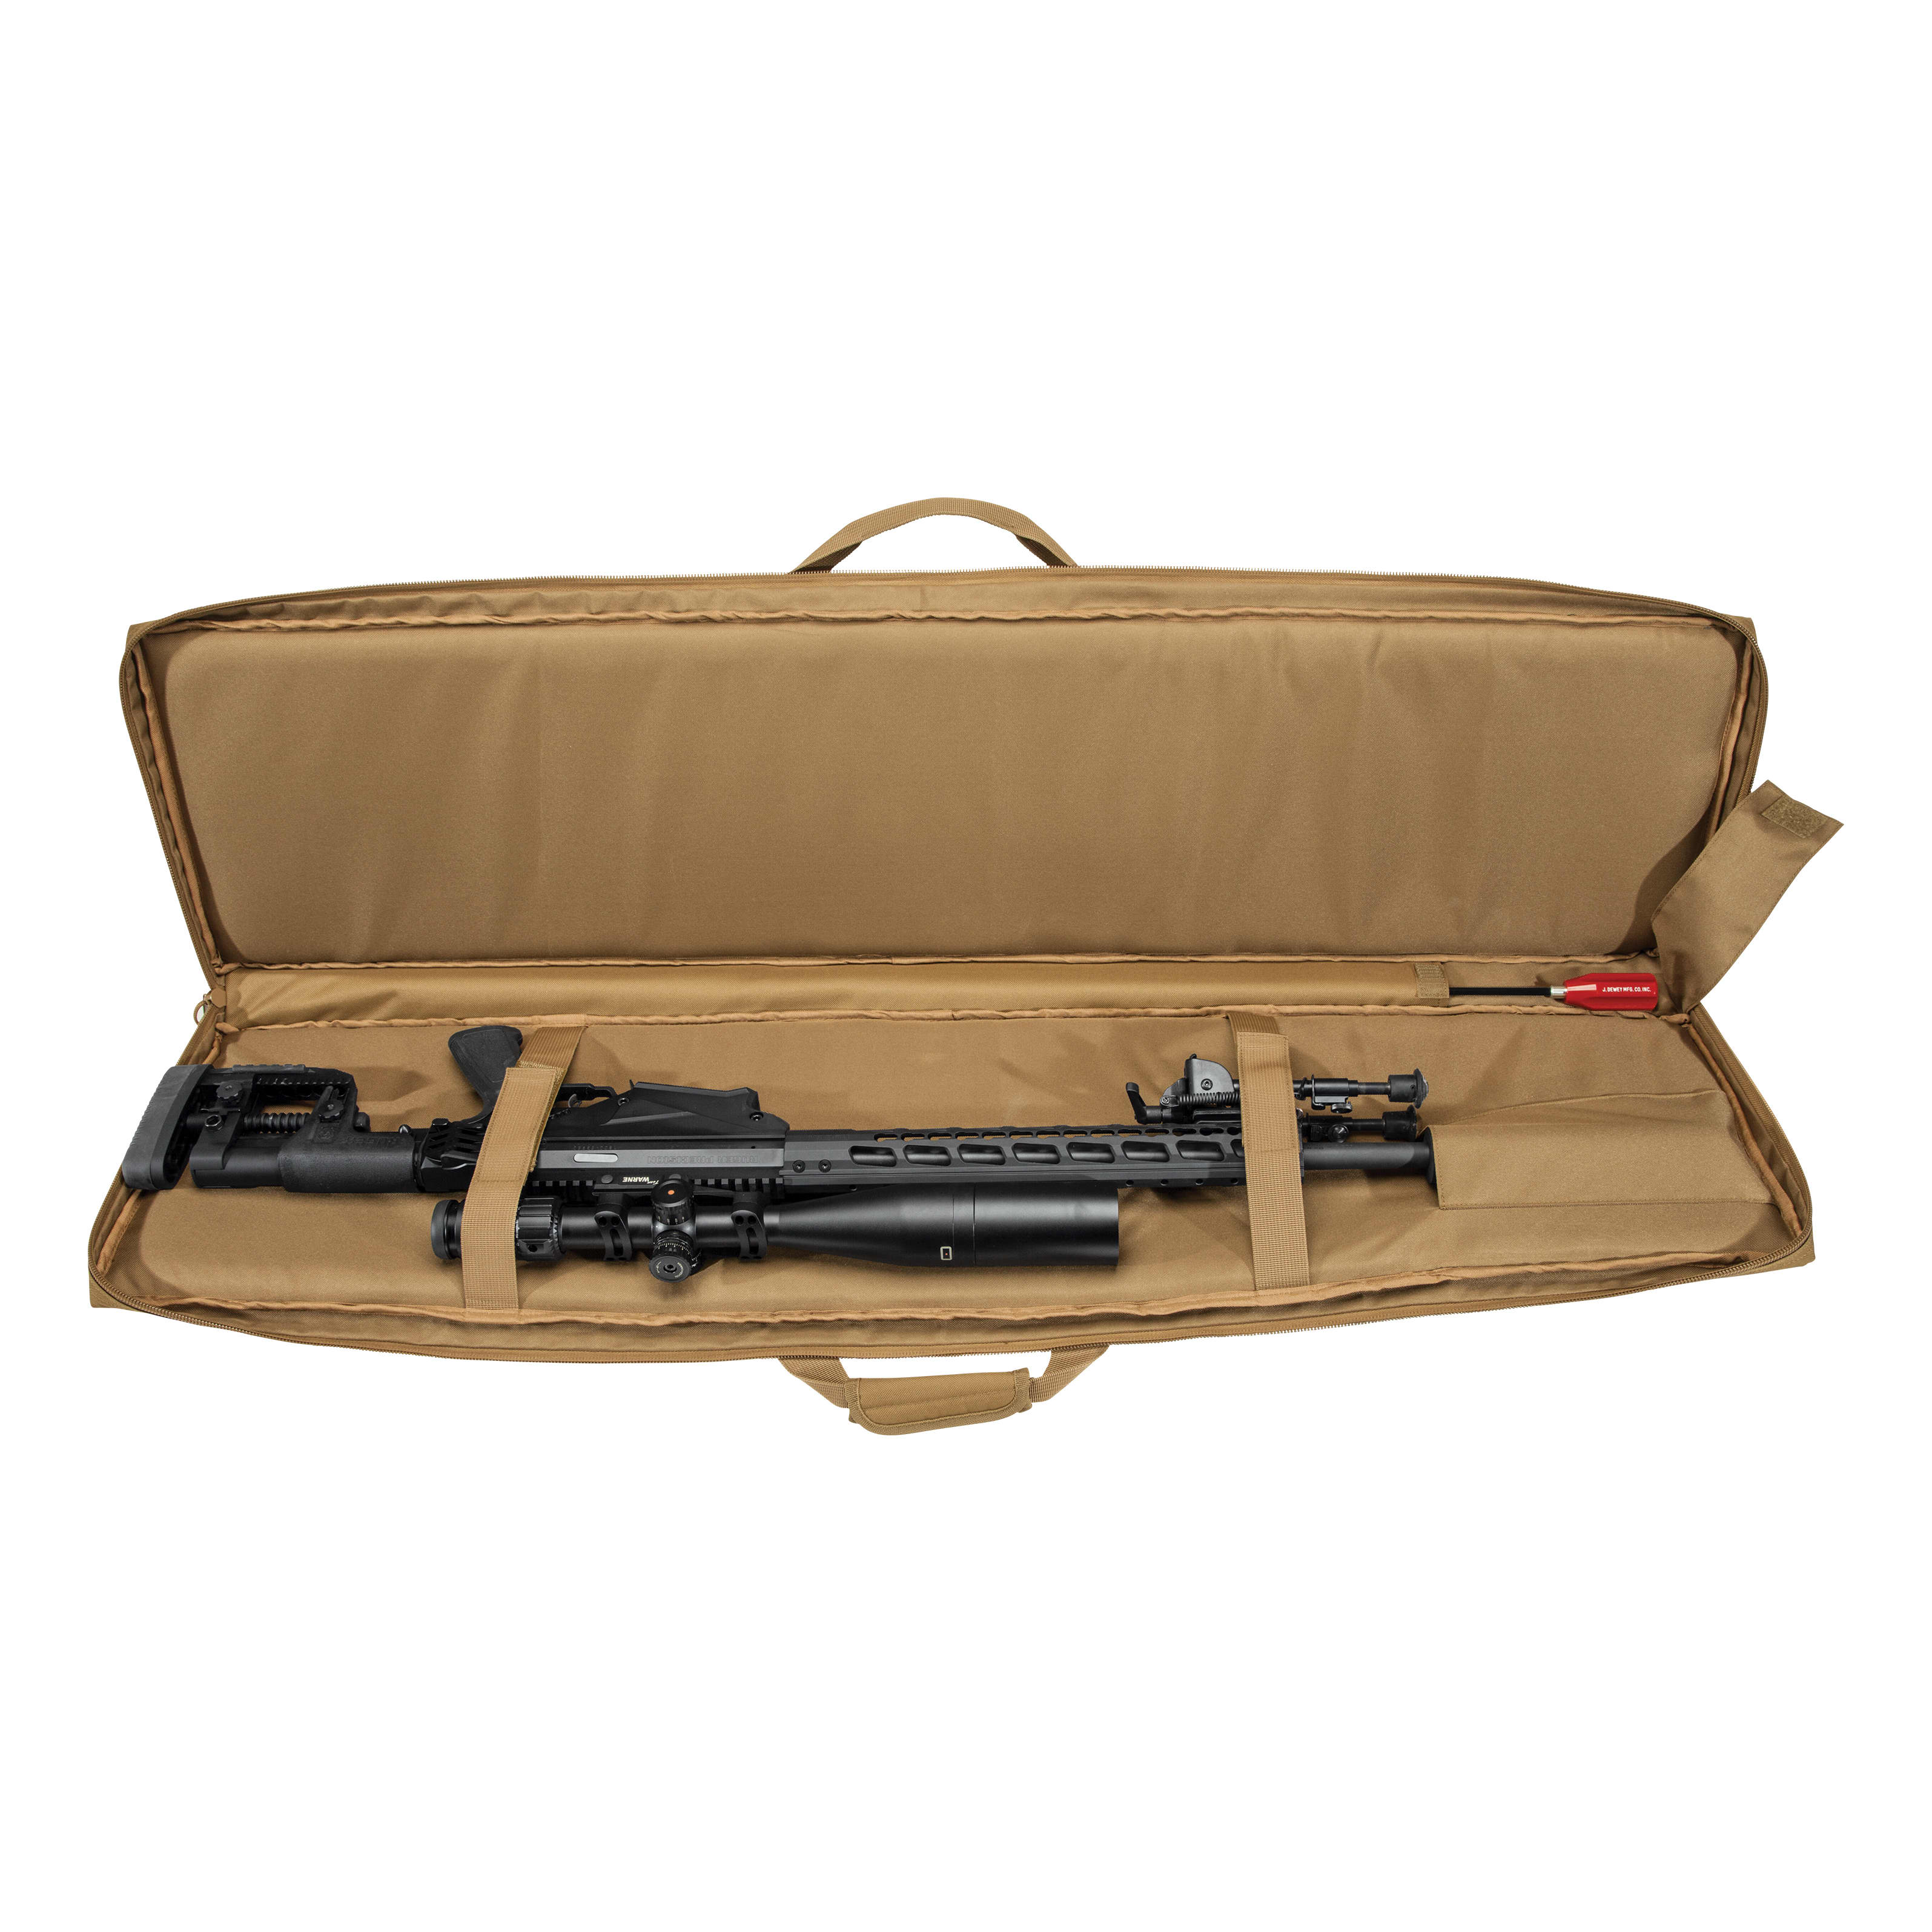 RangeMaxx Long Range Rifle Case - Open View